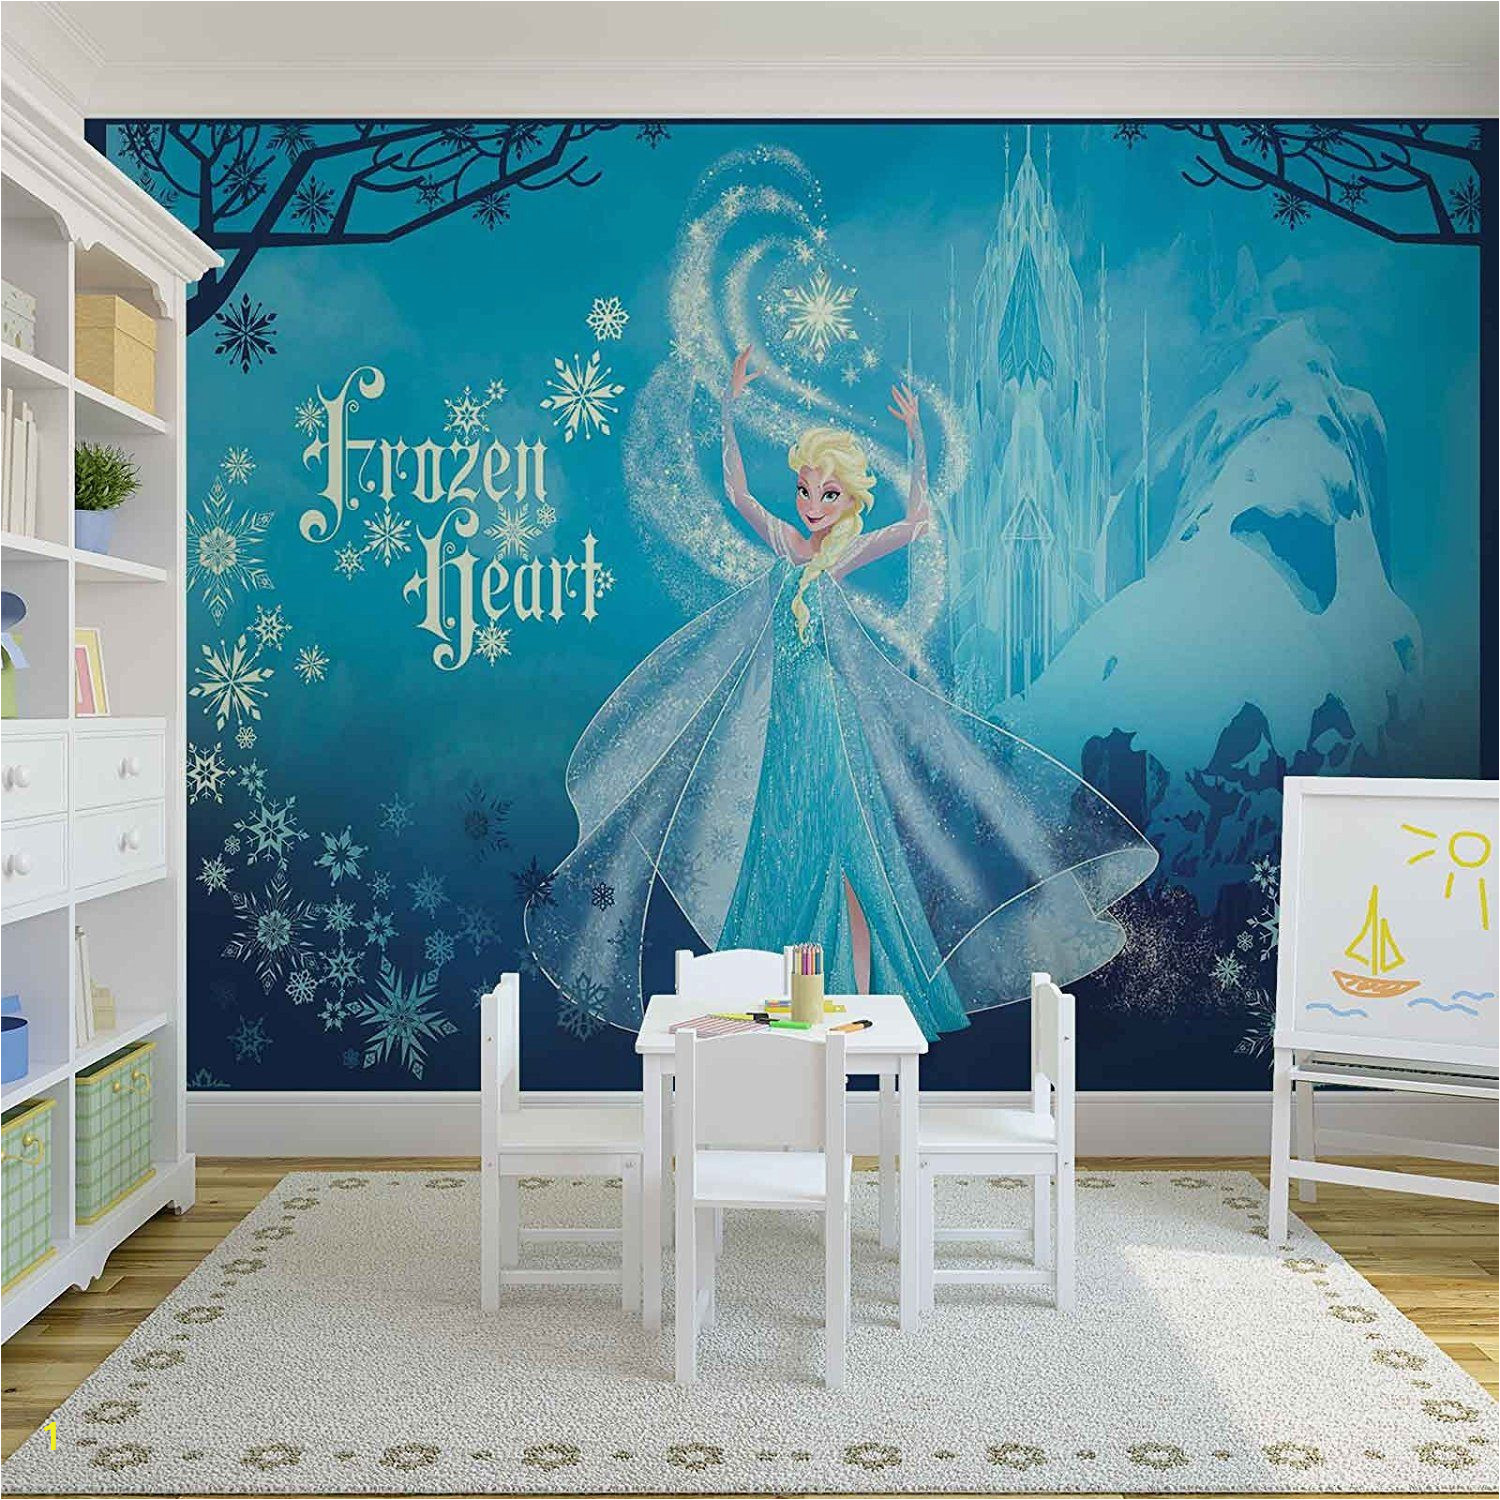 Disney Frozen Wall Mural â Frozen Kinderzimmer Disney Frozen Eiskönigin Elsa